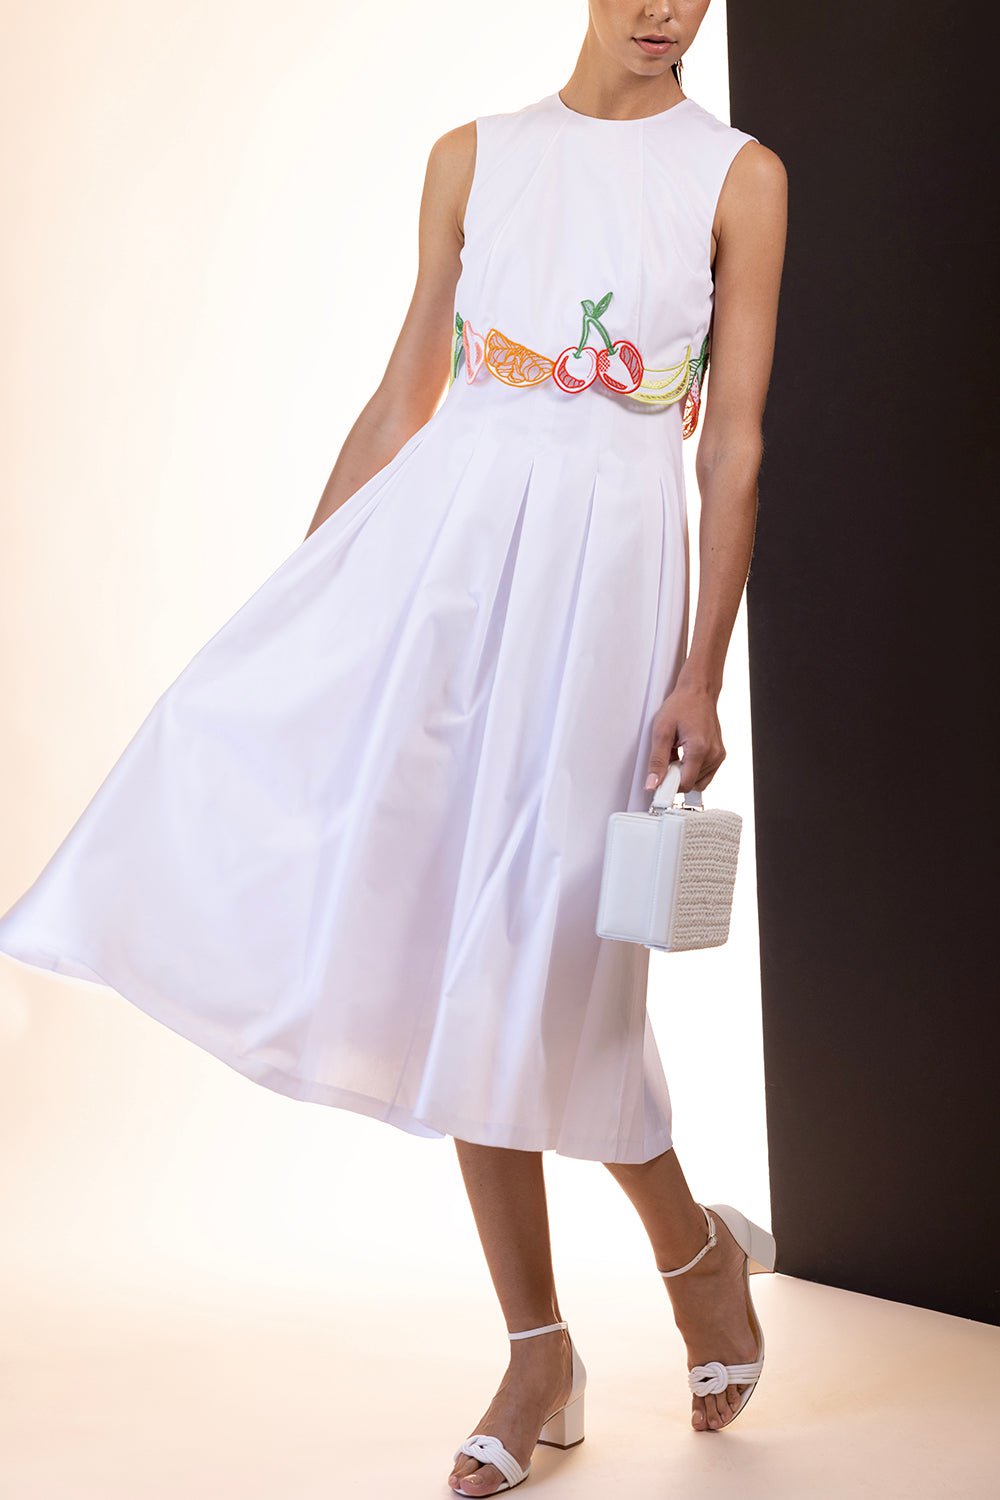 LELA ROSE-Fruit Embroidered Dress-